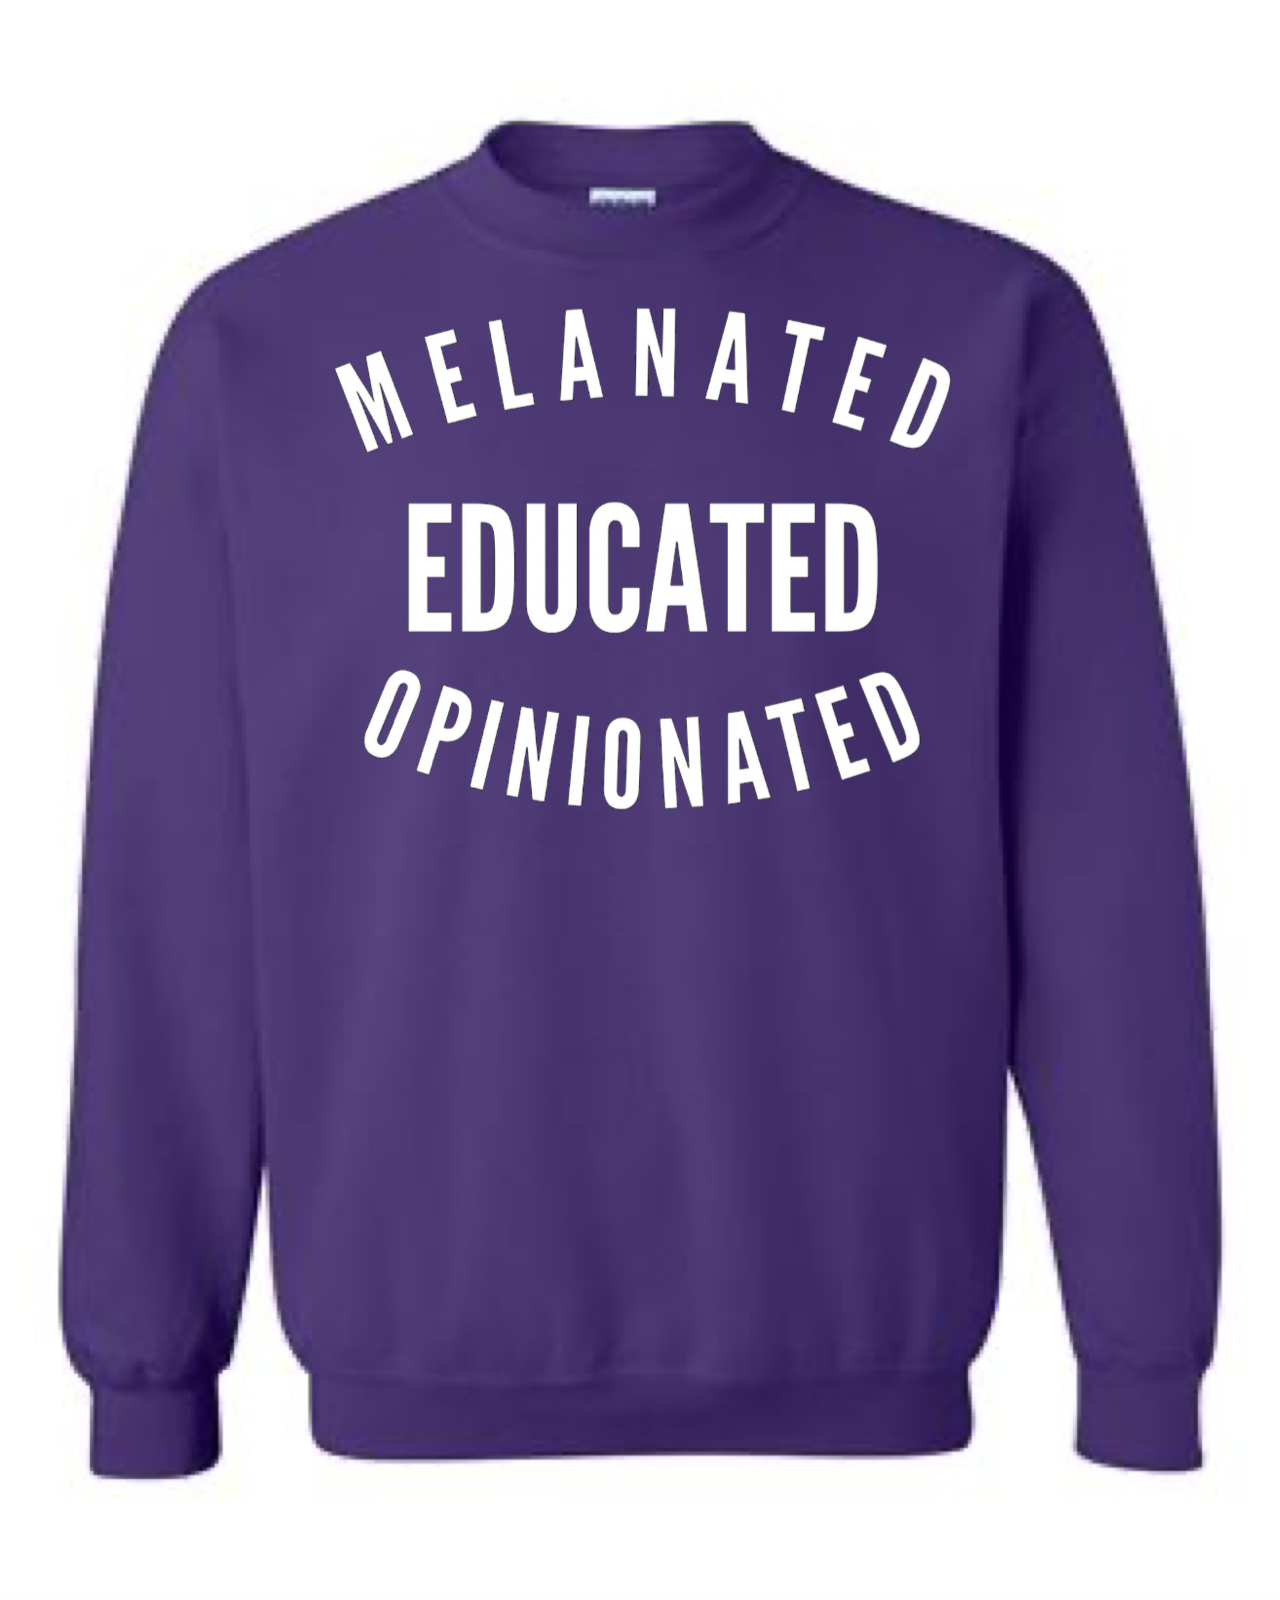 Mens' Melanated Educated Opinionated Crewneck Sweatshirt